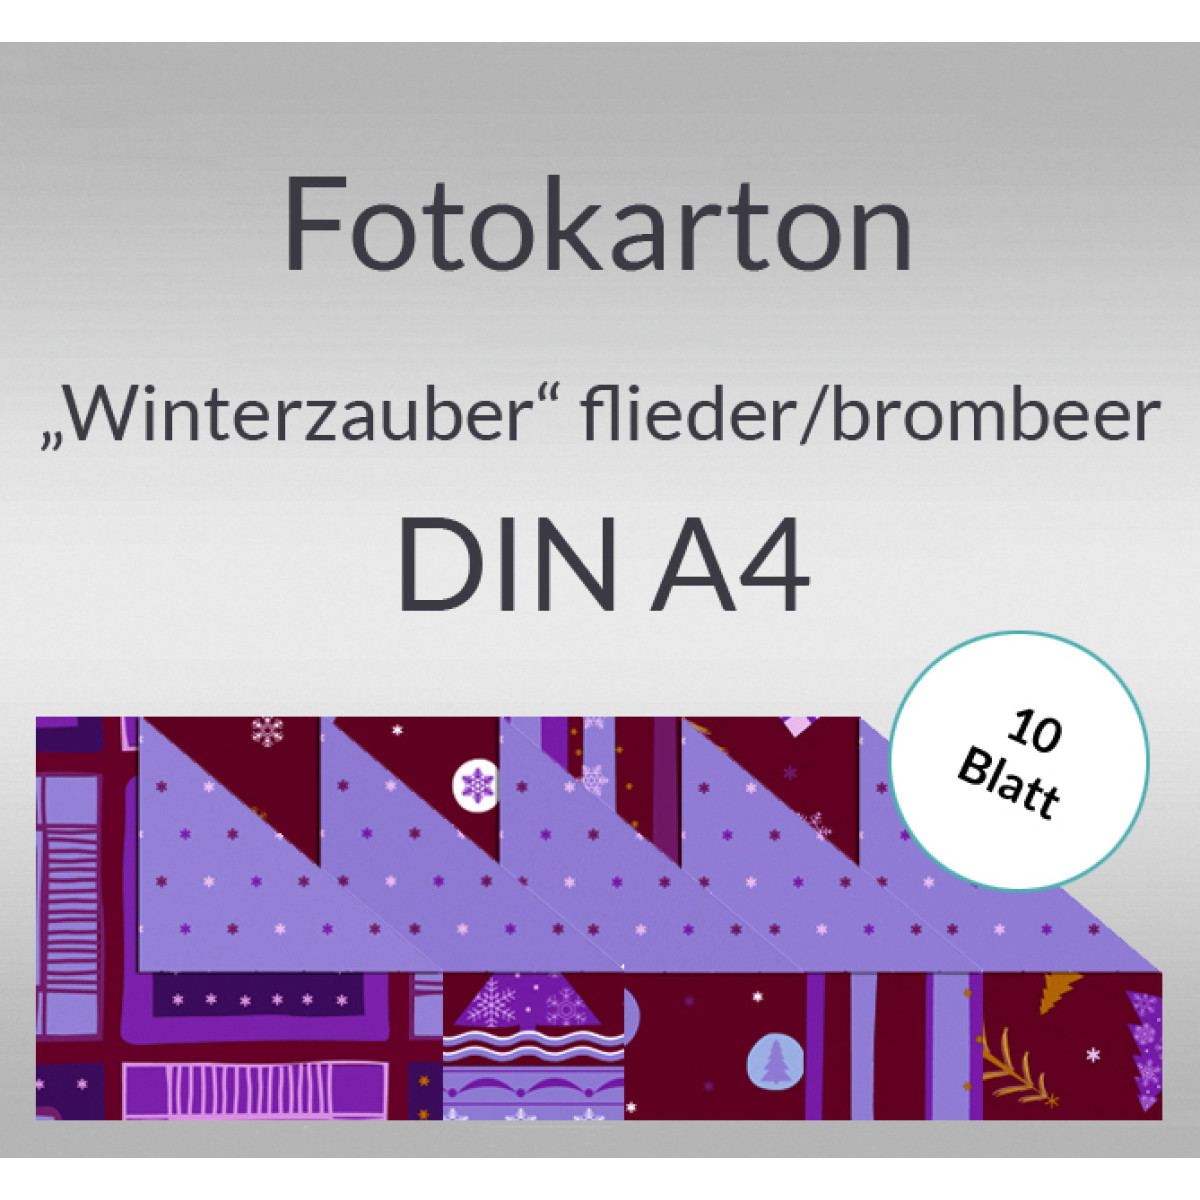 Fotokarton "Winterzauber" flieder/brombeer DIN A4 - 10 Blatt